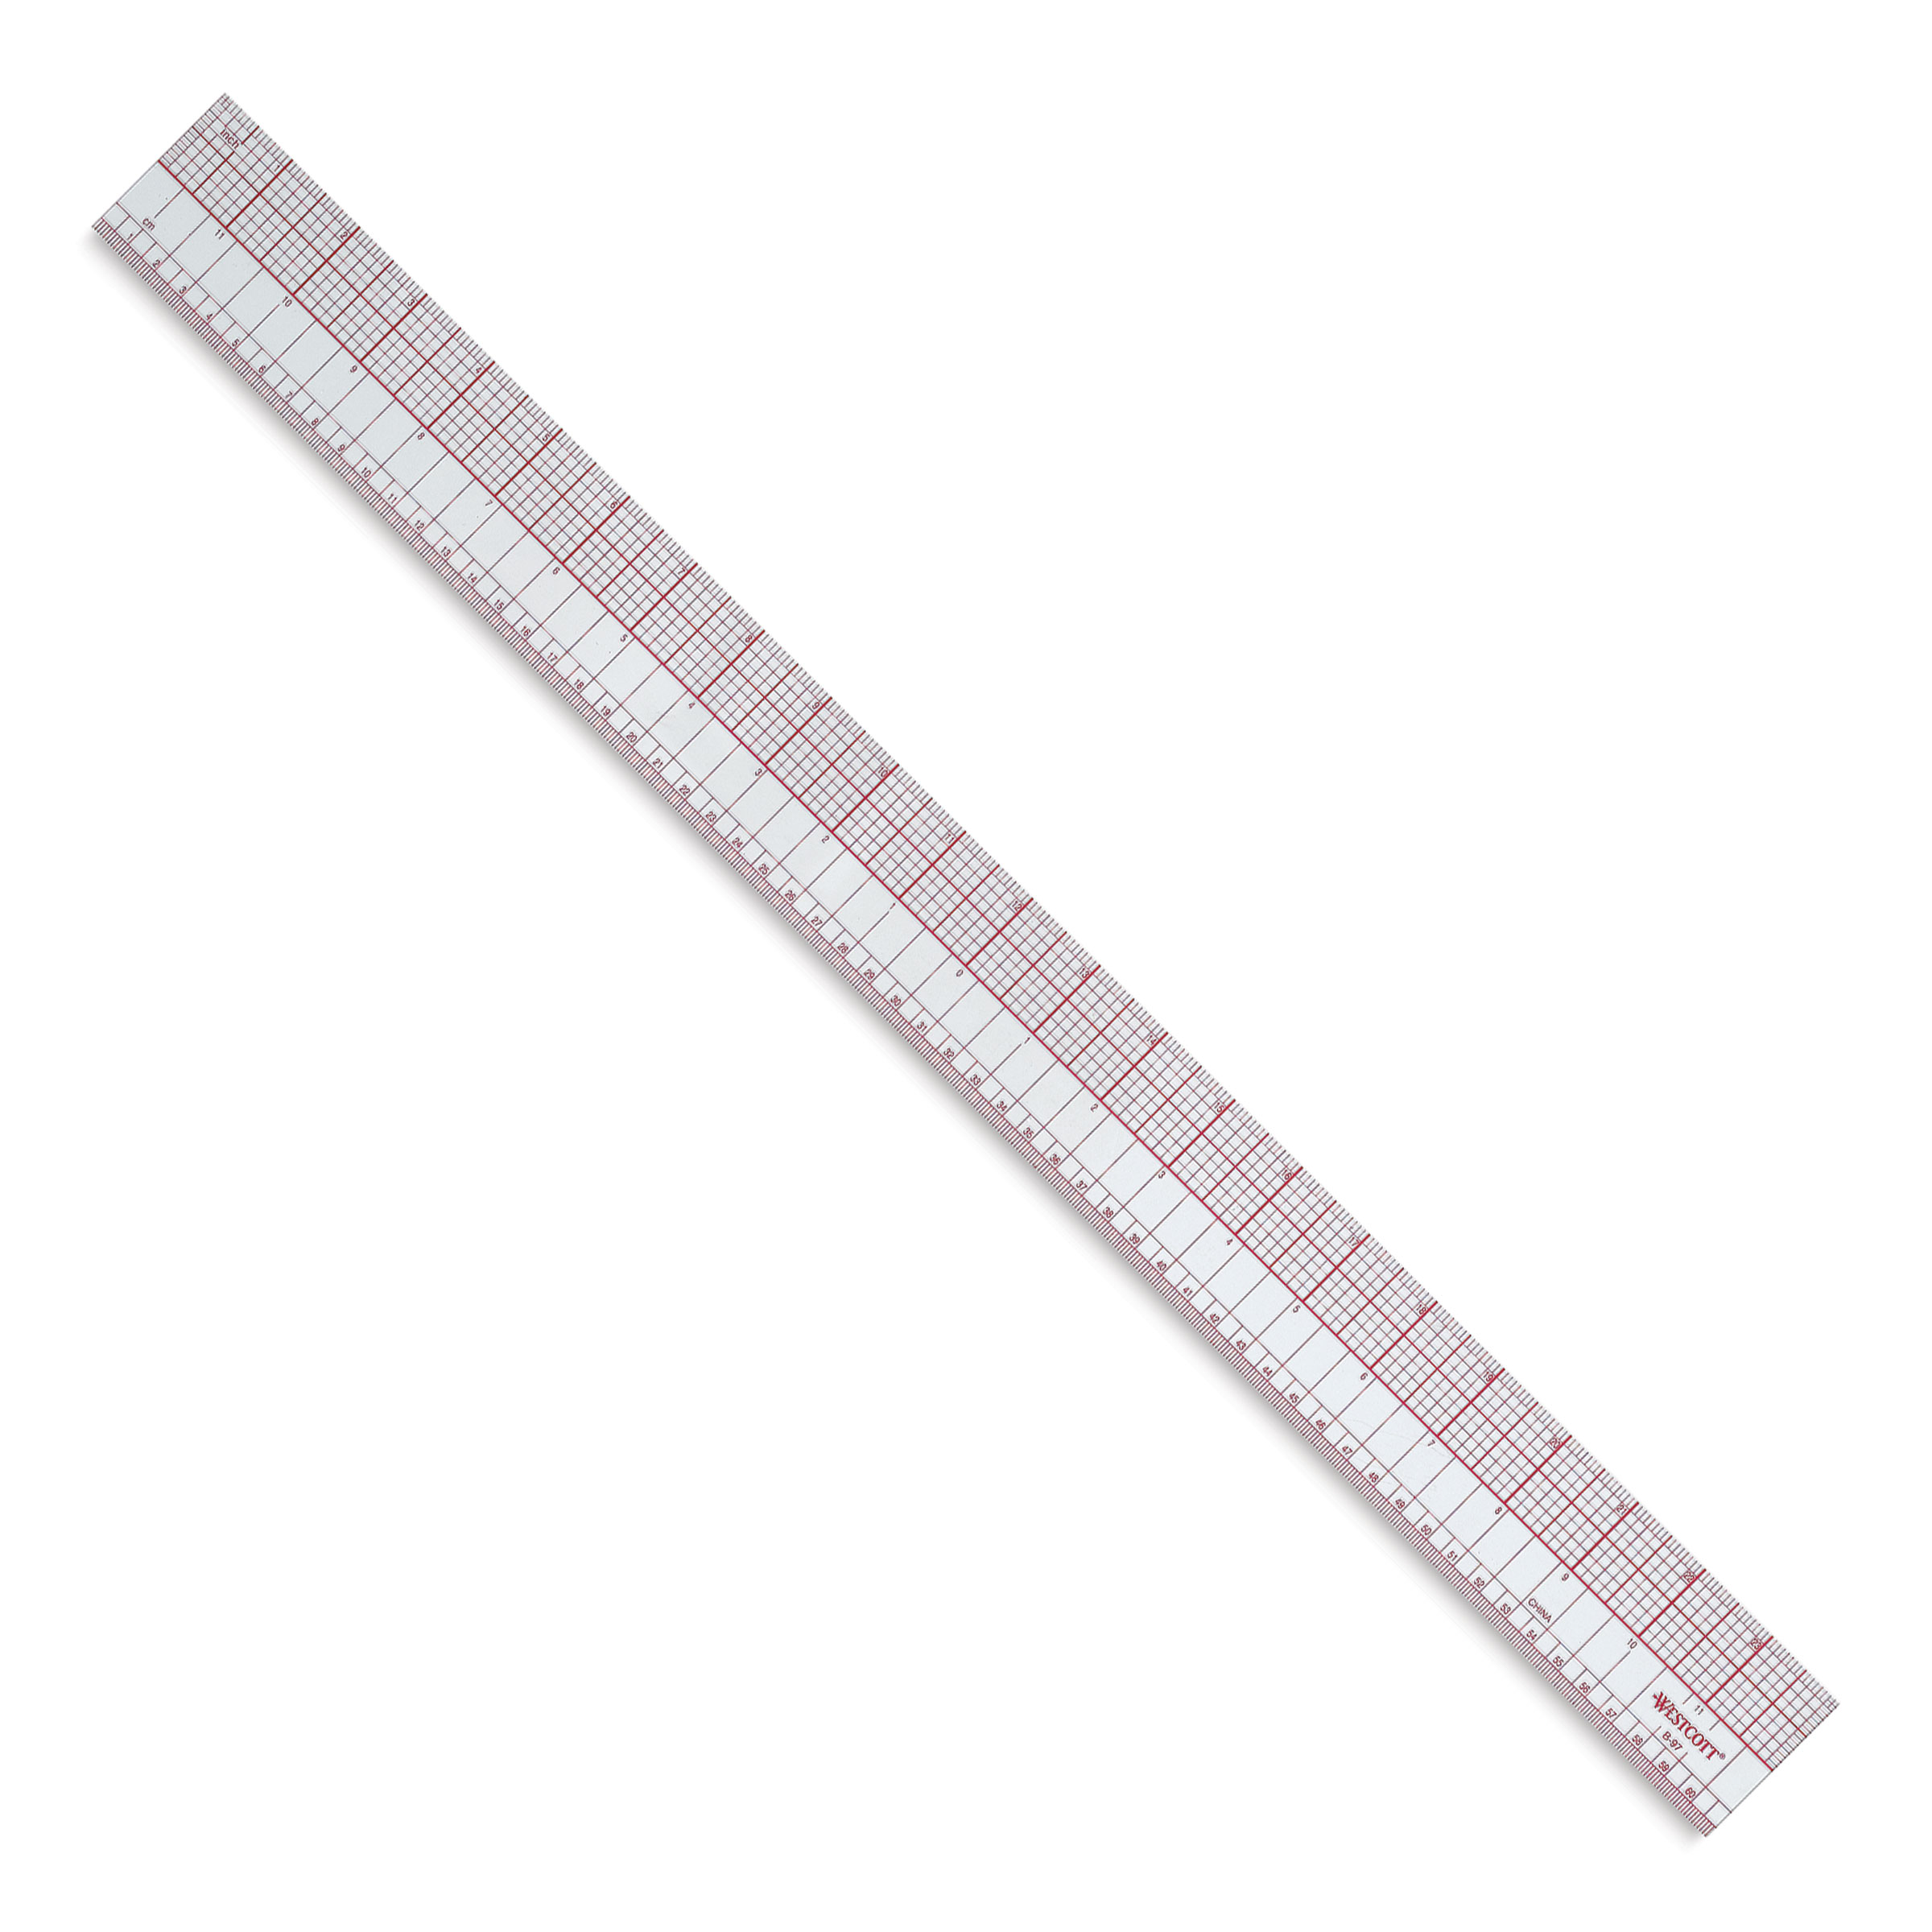 Custom Printed 12 inch Alumicolor Standard T Square Ruler